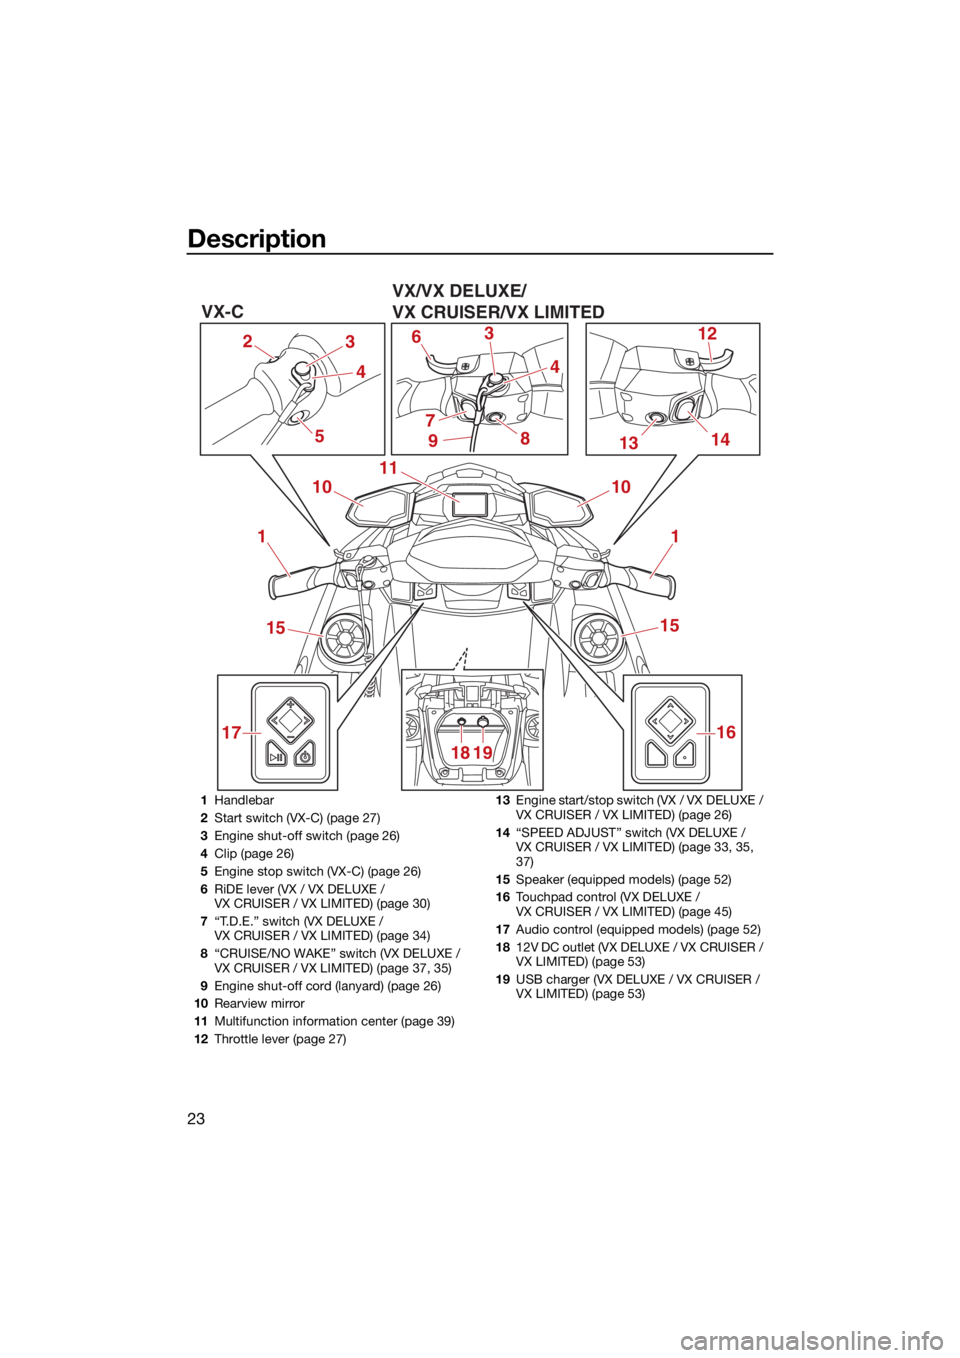 YAMAHA VX 2022  Owners Manual Description
23
1
6
1314
17 12
3
8 10
11
3
71
15
16
18 19 15
10
44
5
2
9
VX/VX DELUXE/
VX CRUISER/VX LIMITED
VX-C
1
Handlebar
2 Start switch (VX-C) (page 27)
3 Engine shut-off switch (page 26)
4 Clip (